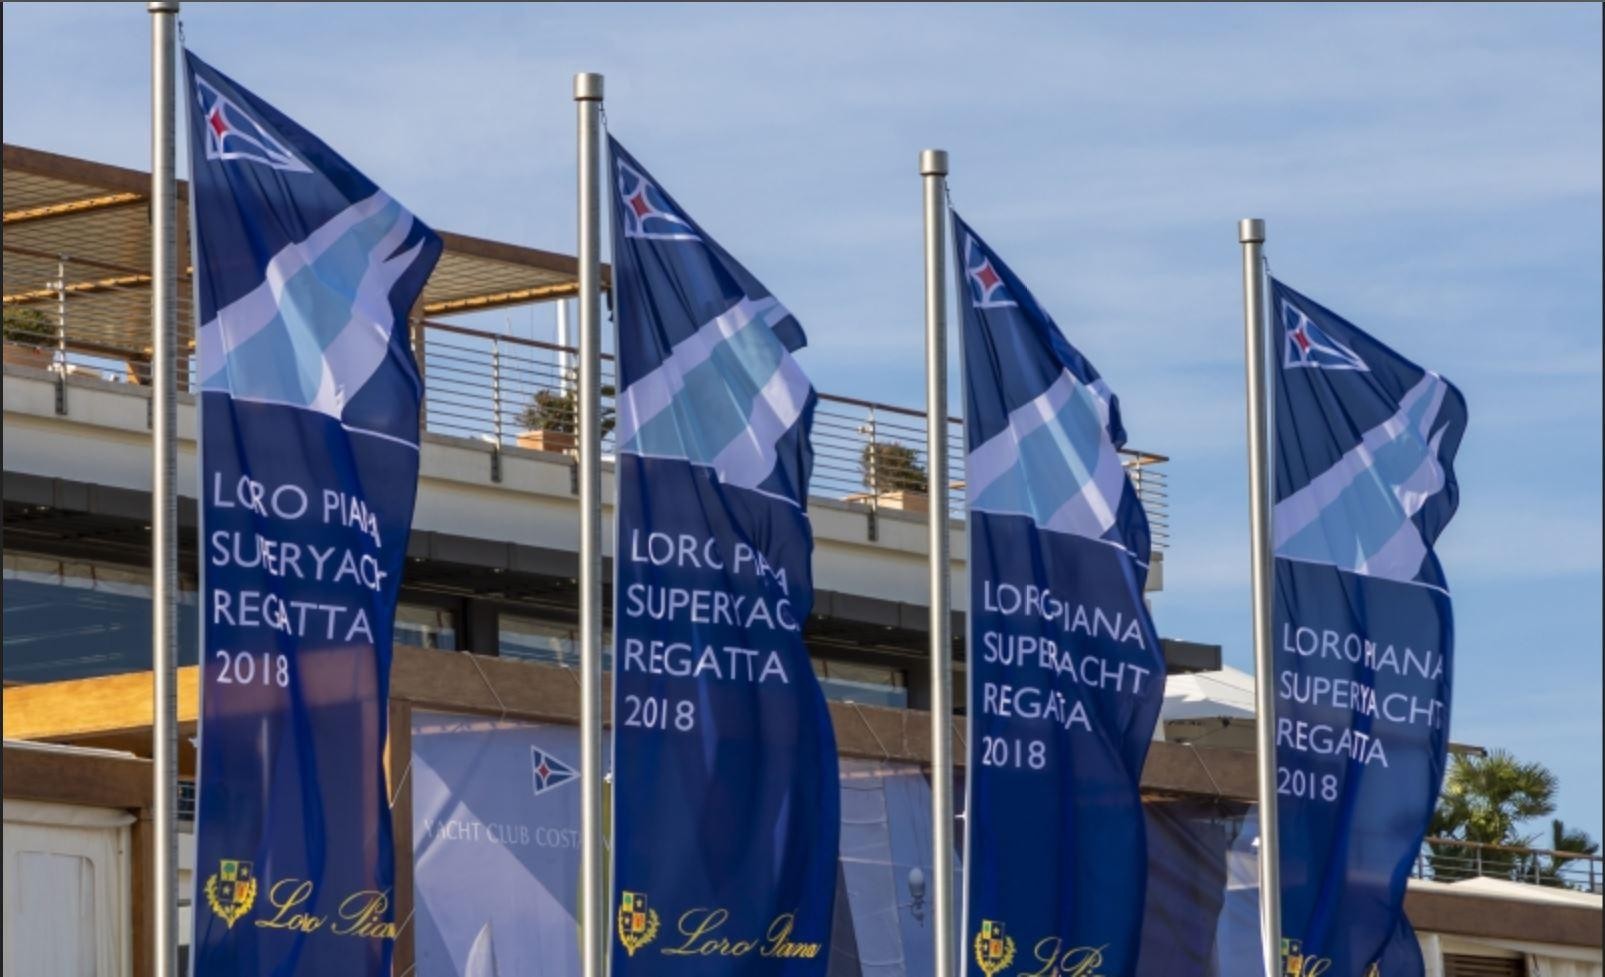 Loro Piana Superyacht Regatta 2018